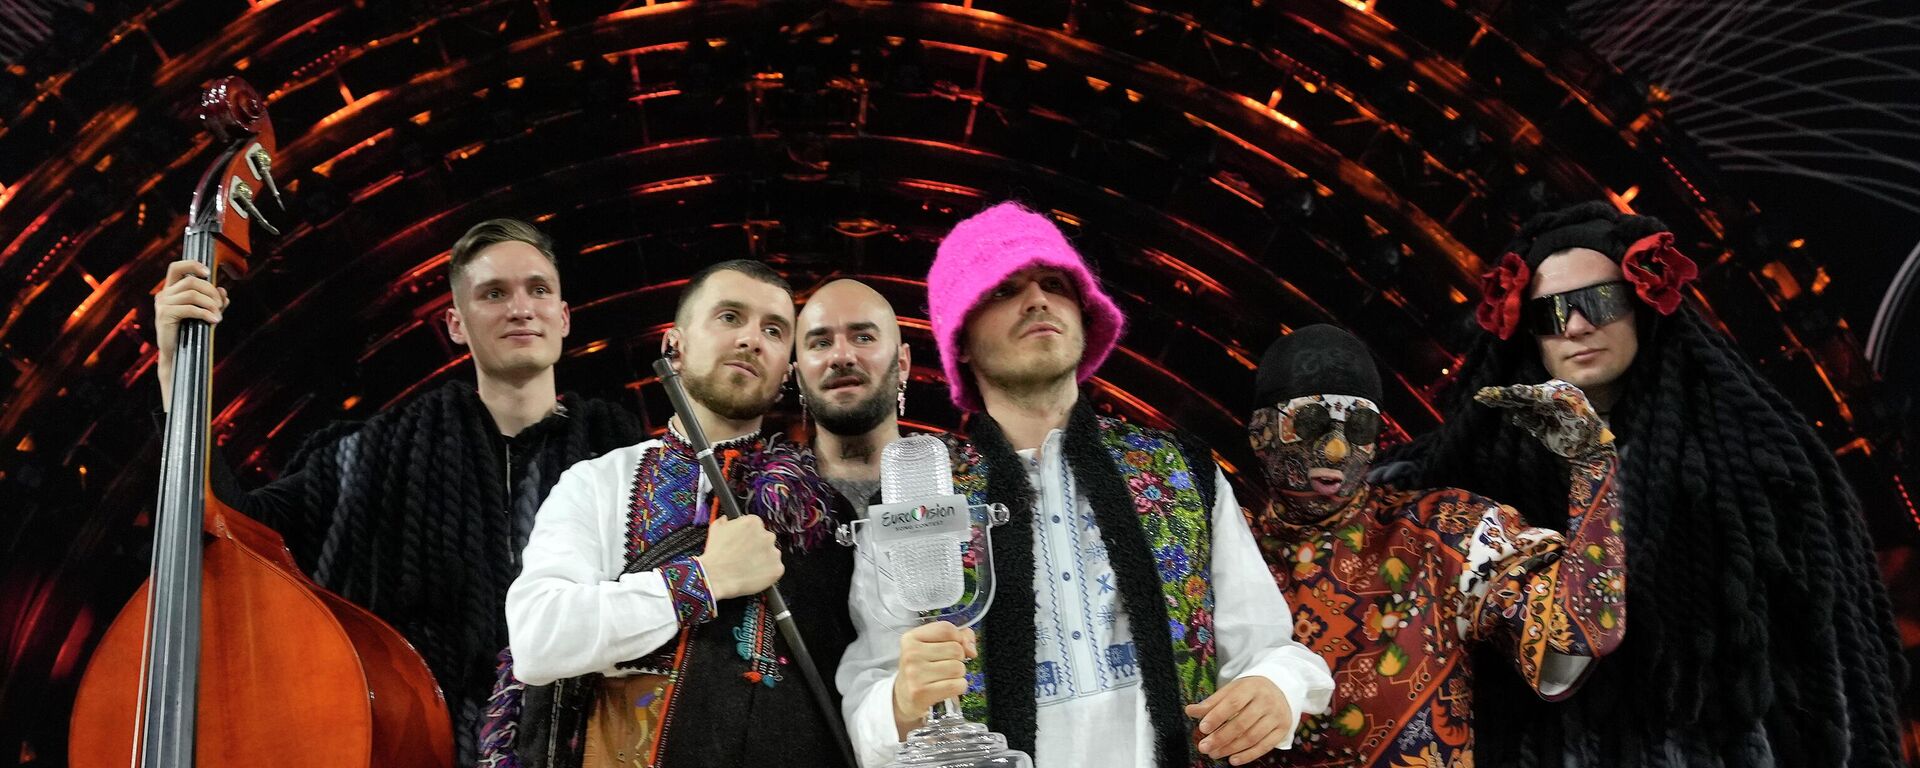 La banda ucraniana Kalush Orchestra ganó el festival de Eurovisión 2022 - Sputnik Mundo, 1920, 15.05.2022